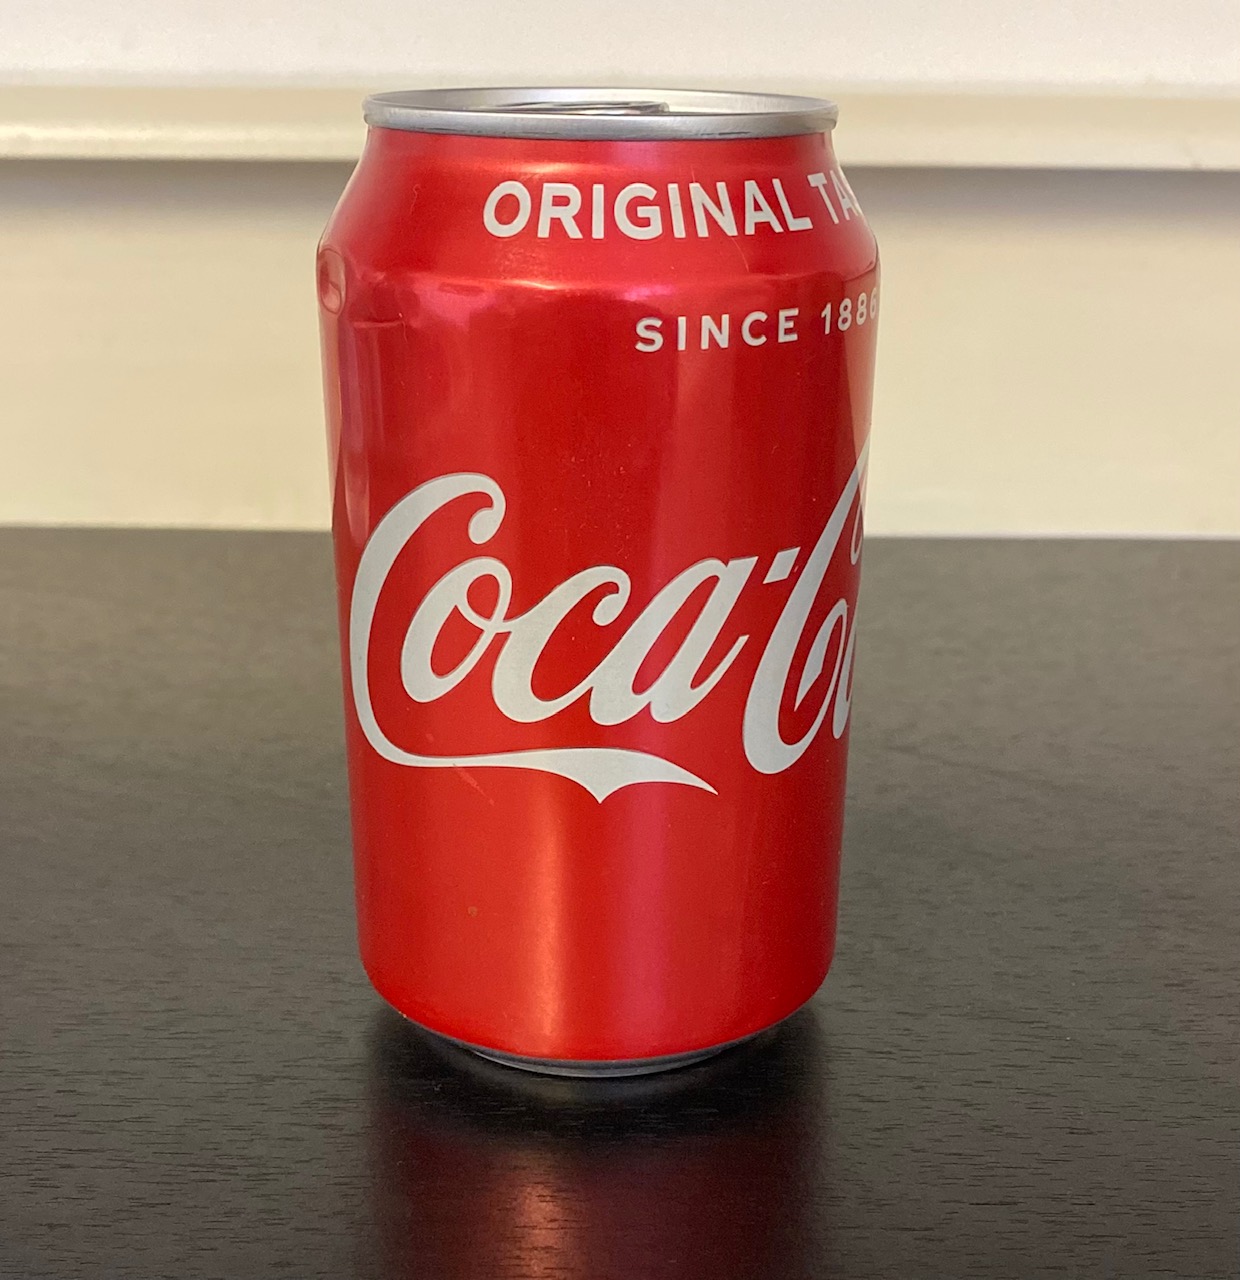 A can of Coca-Cola